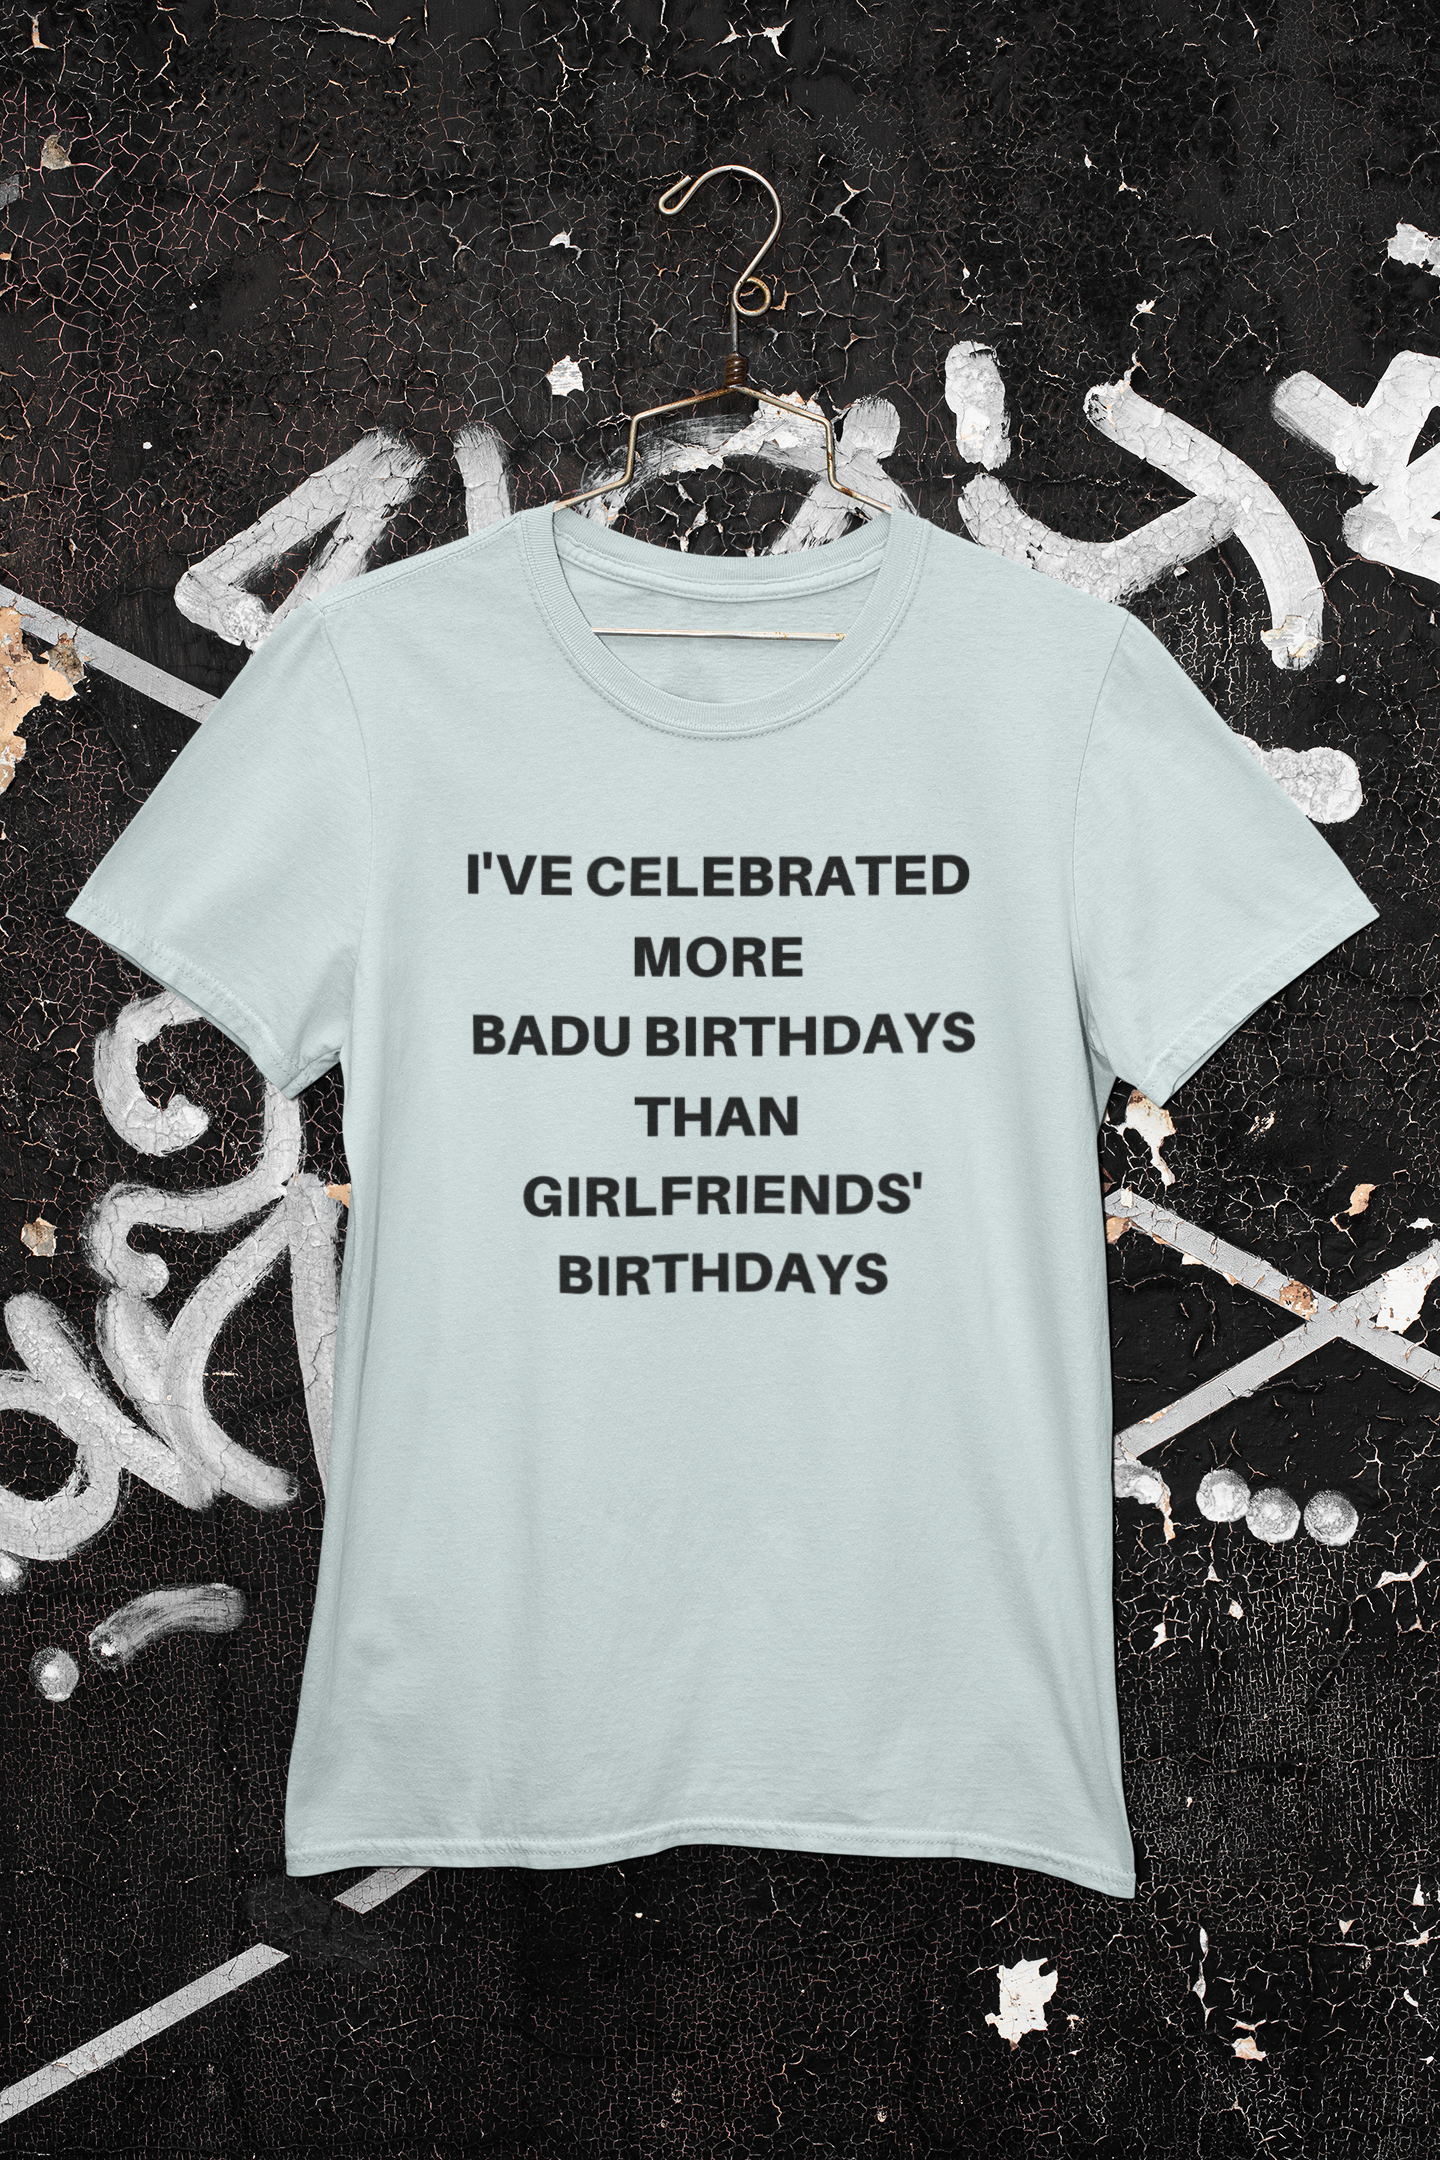 Badu/Girlfriend Birthday Tee